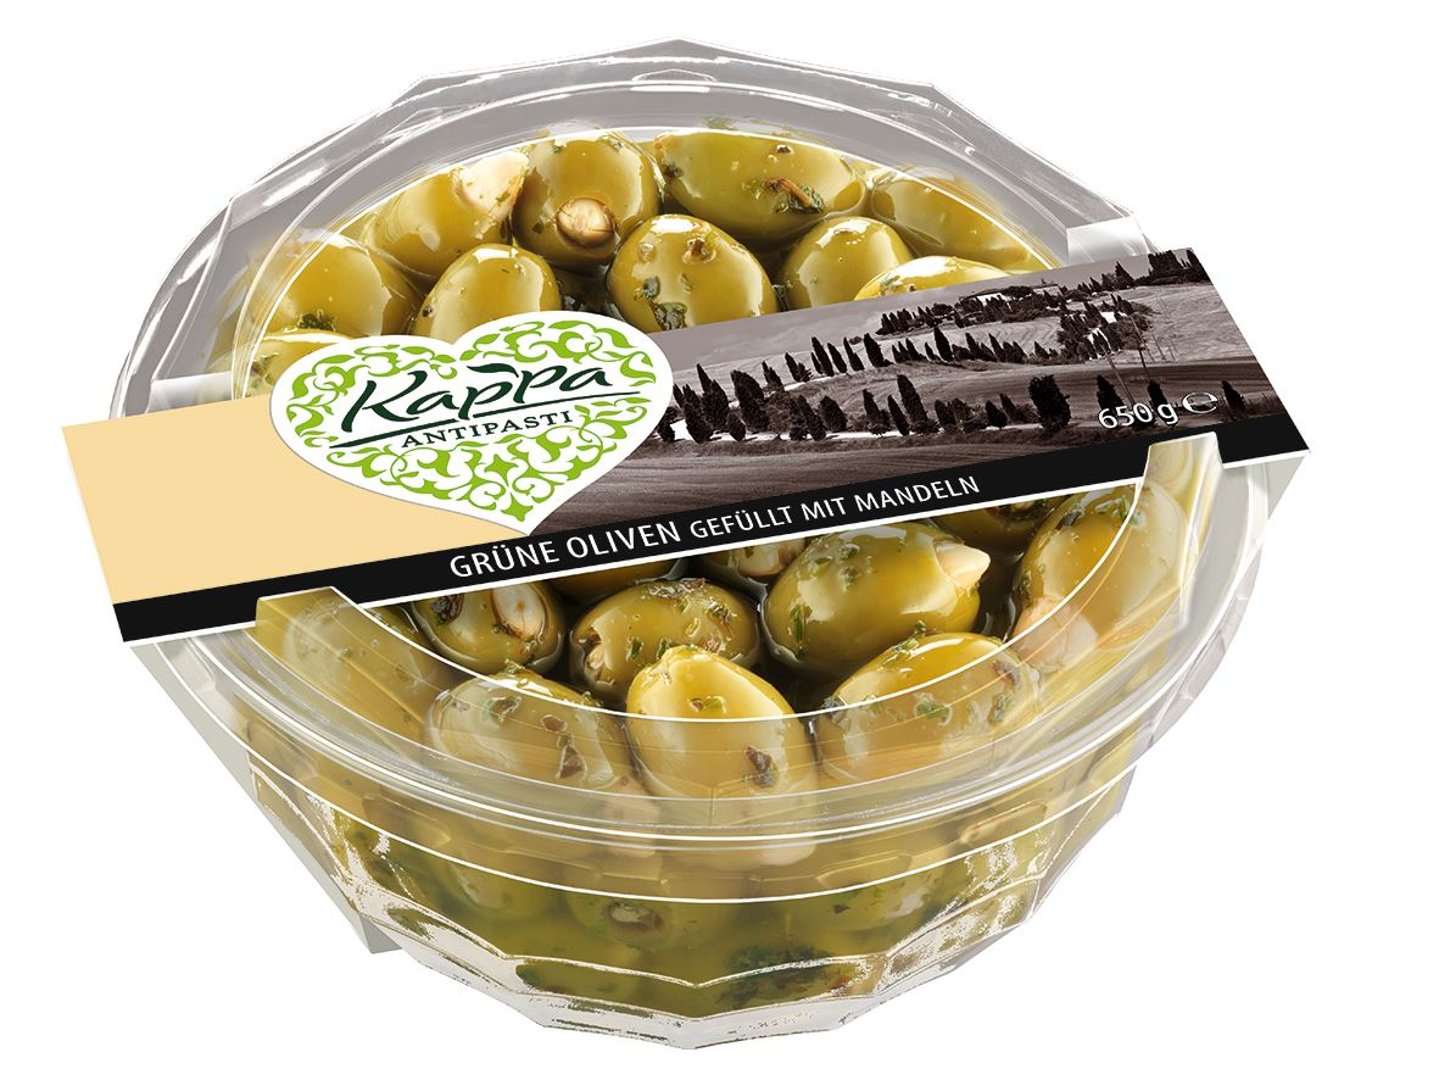 Kappa Oliven Grün gefüllt mit Mandeln gekühlt - 650 g Packung